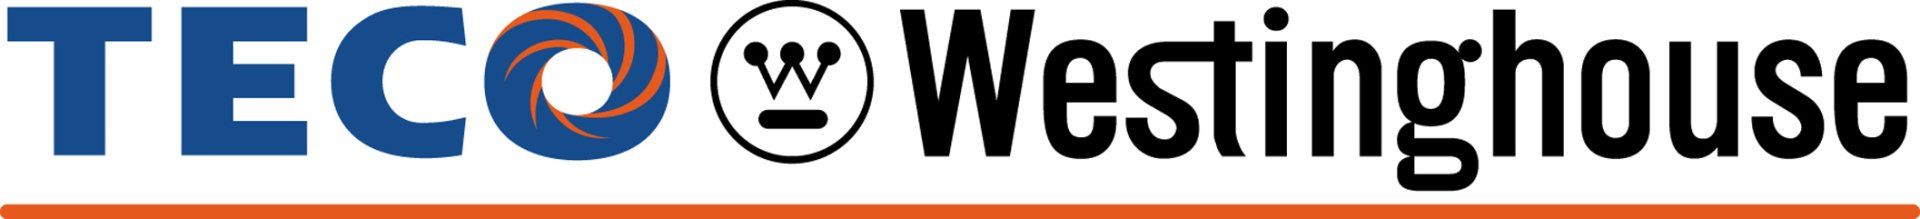 Teco-Westinghouse Logo